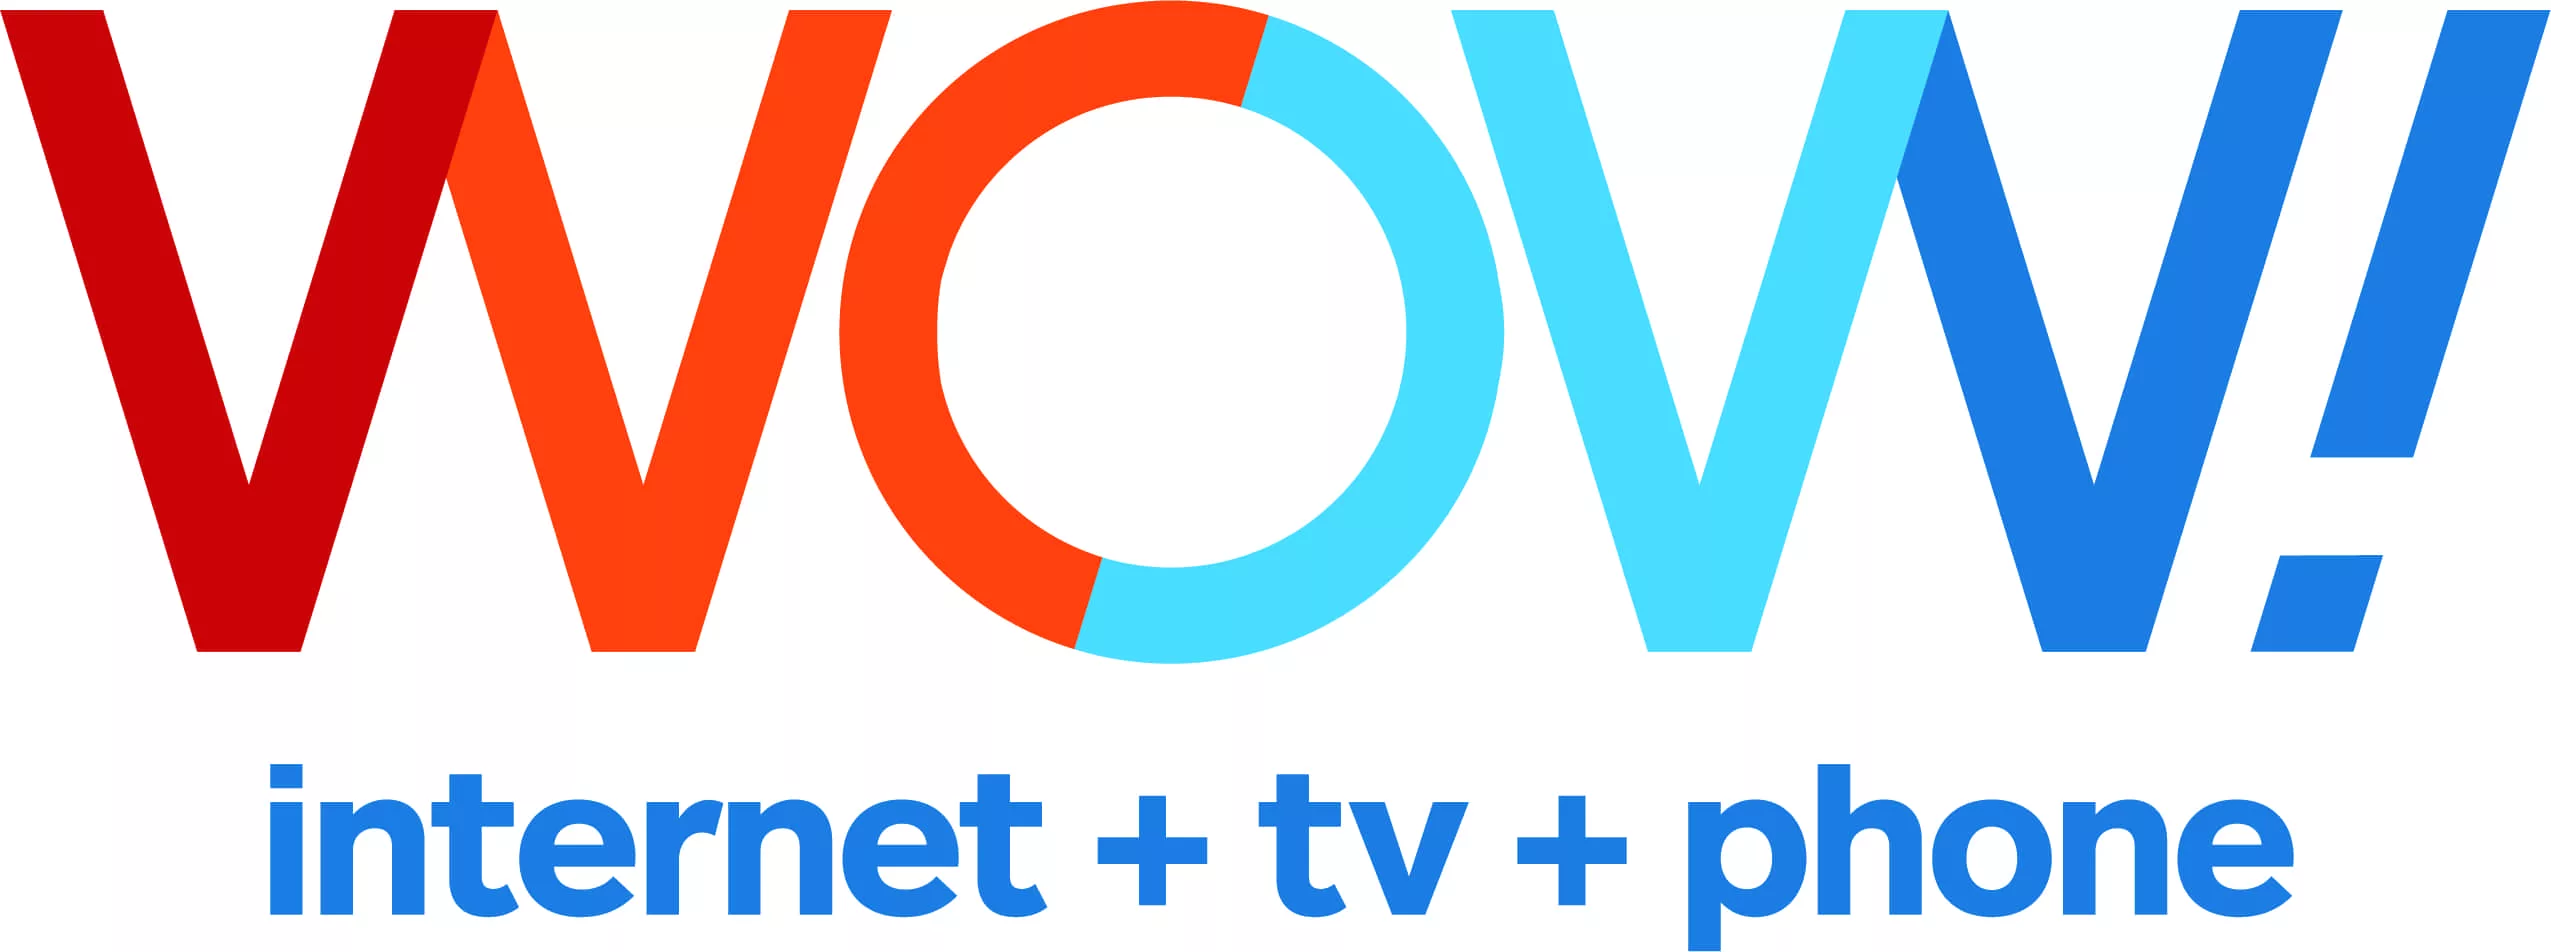 WOW-internet-tv-phone_vert_4c